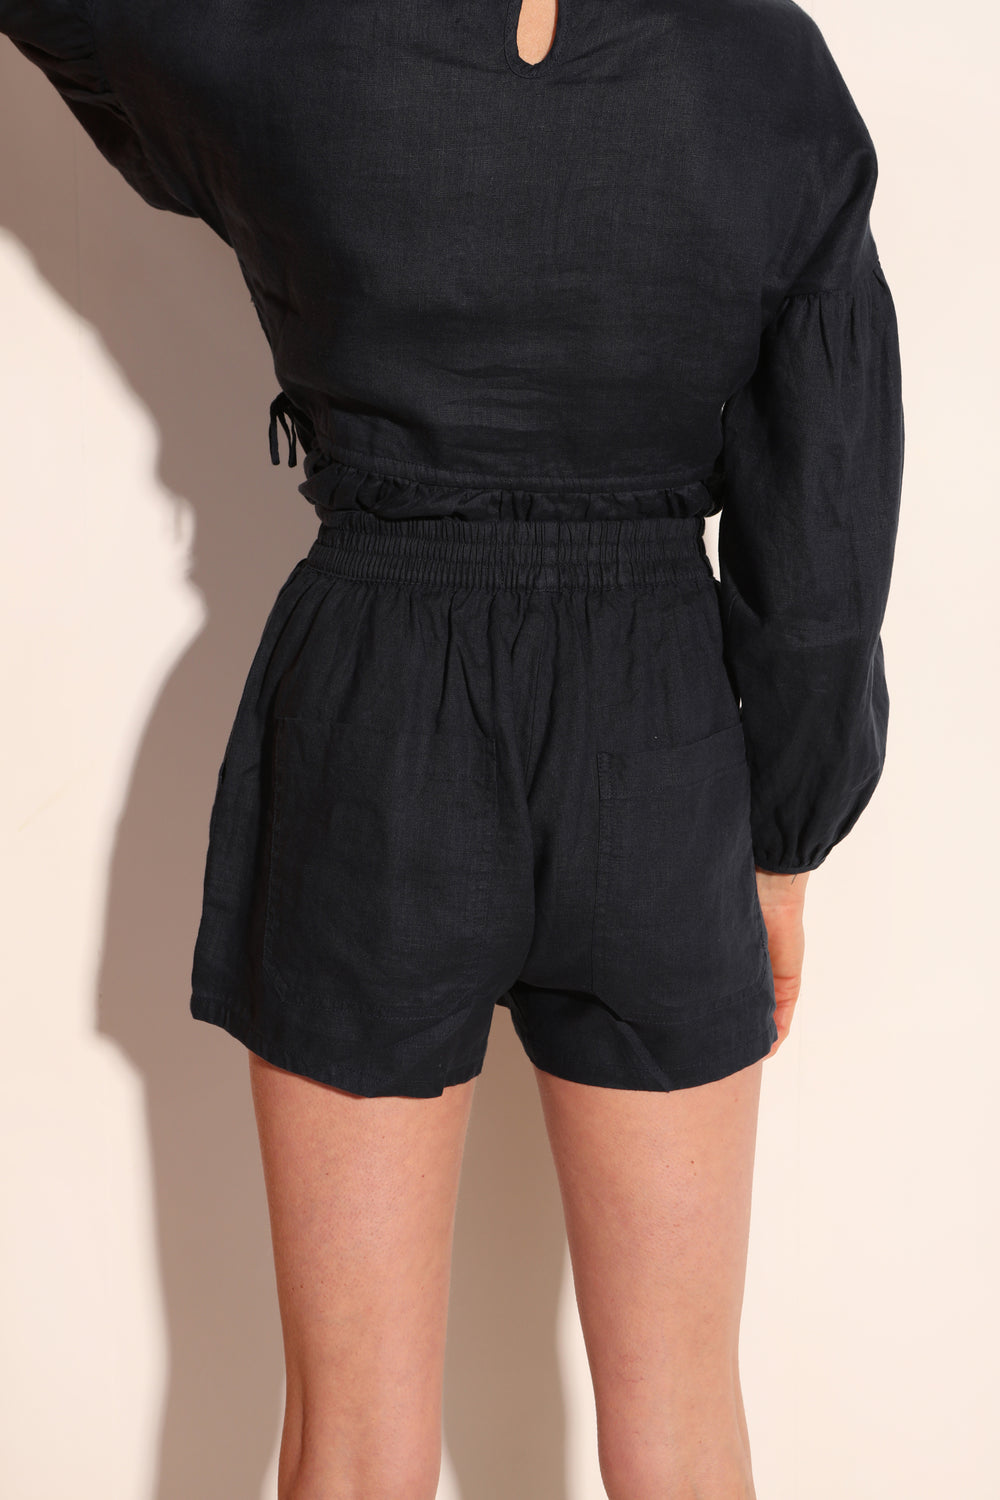 Basic Linen Shorts Navy